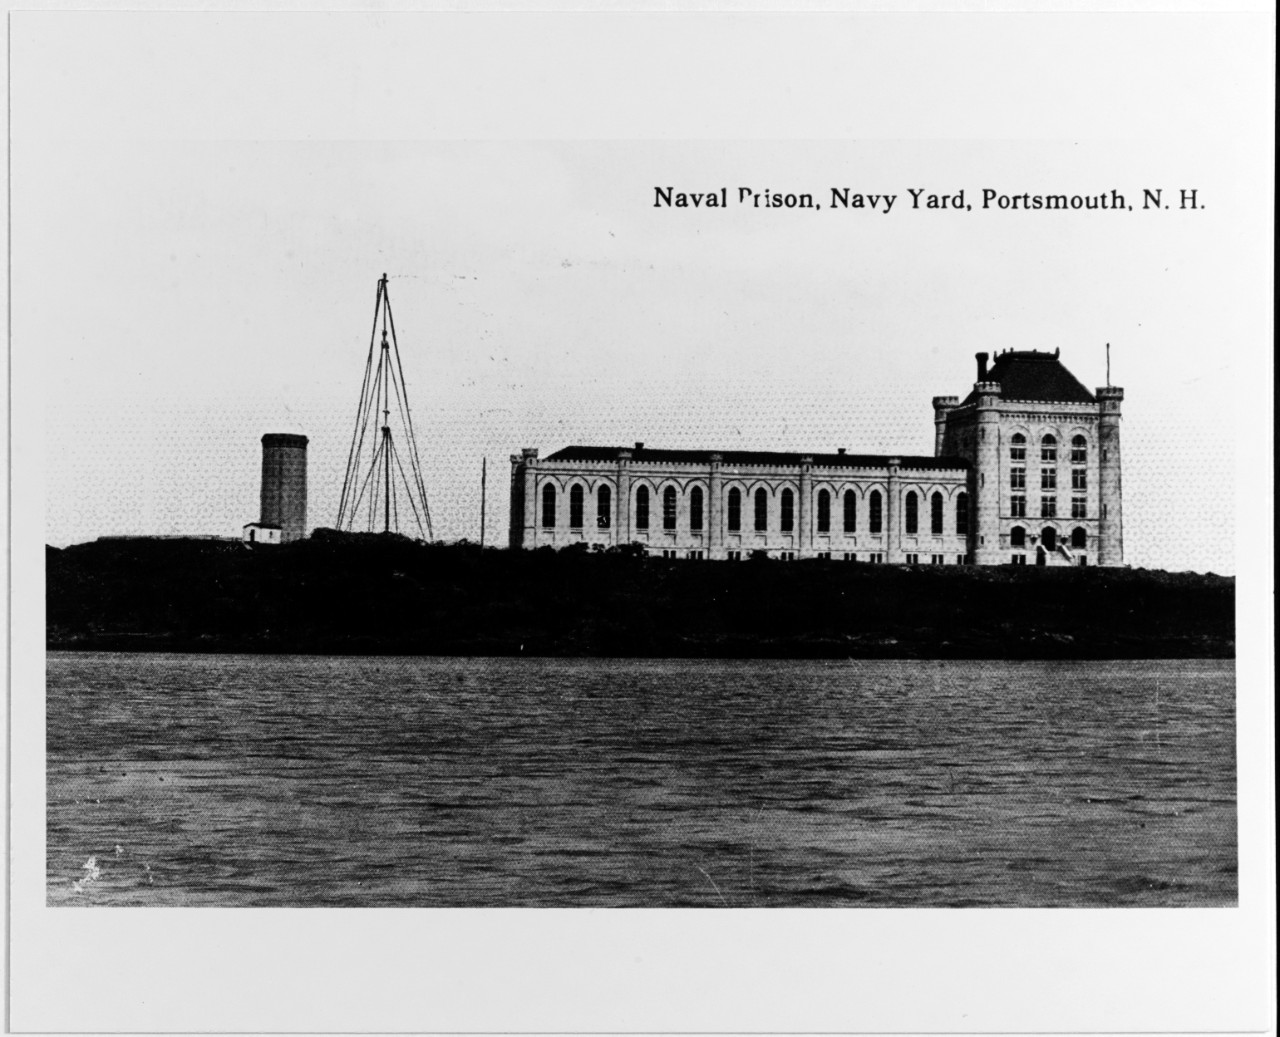 U.S. Naval Prison, Portsmouth, New Hampshire